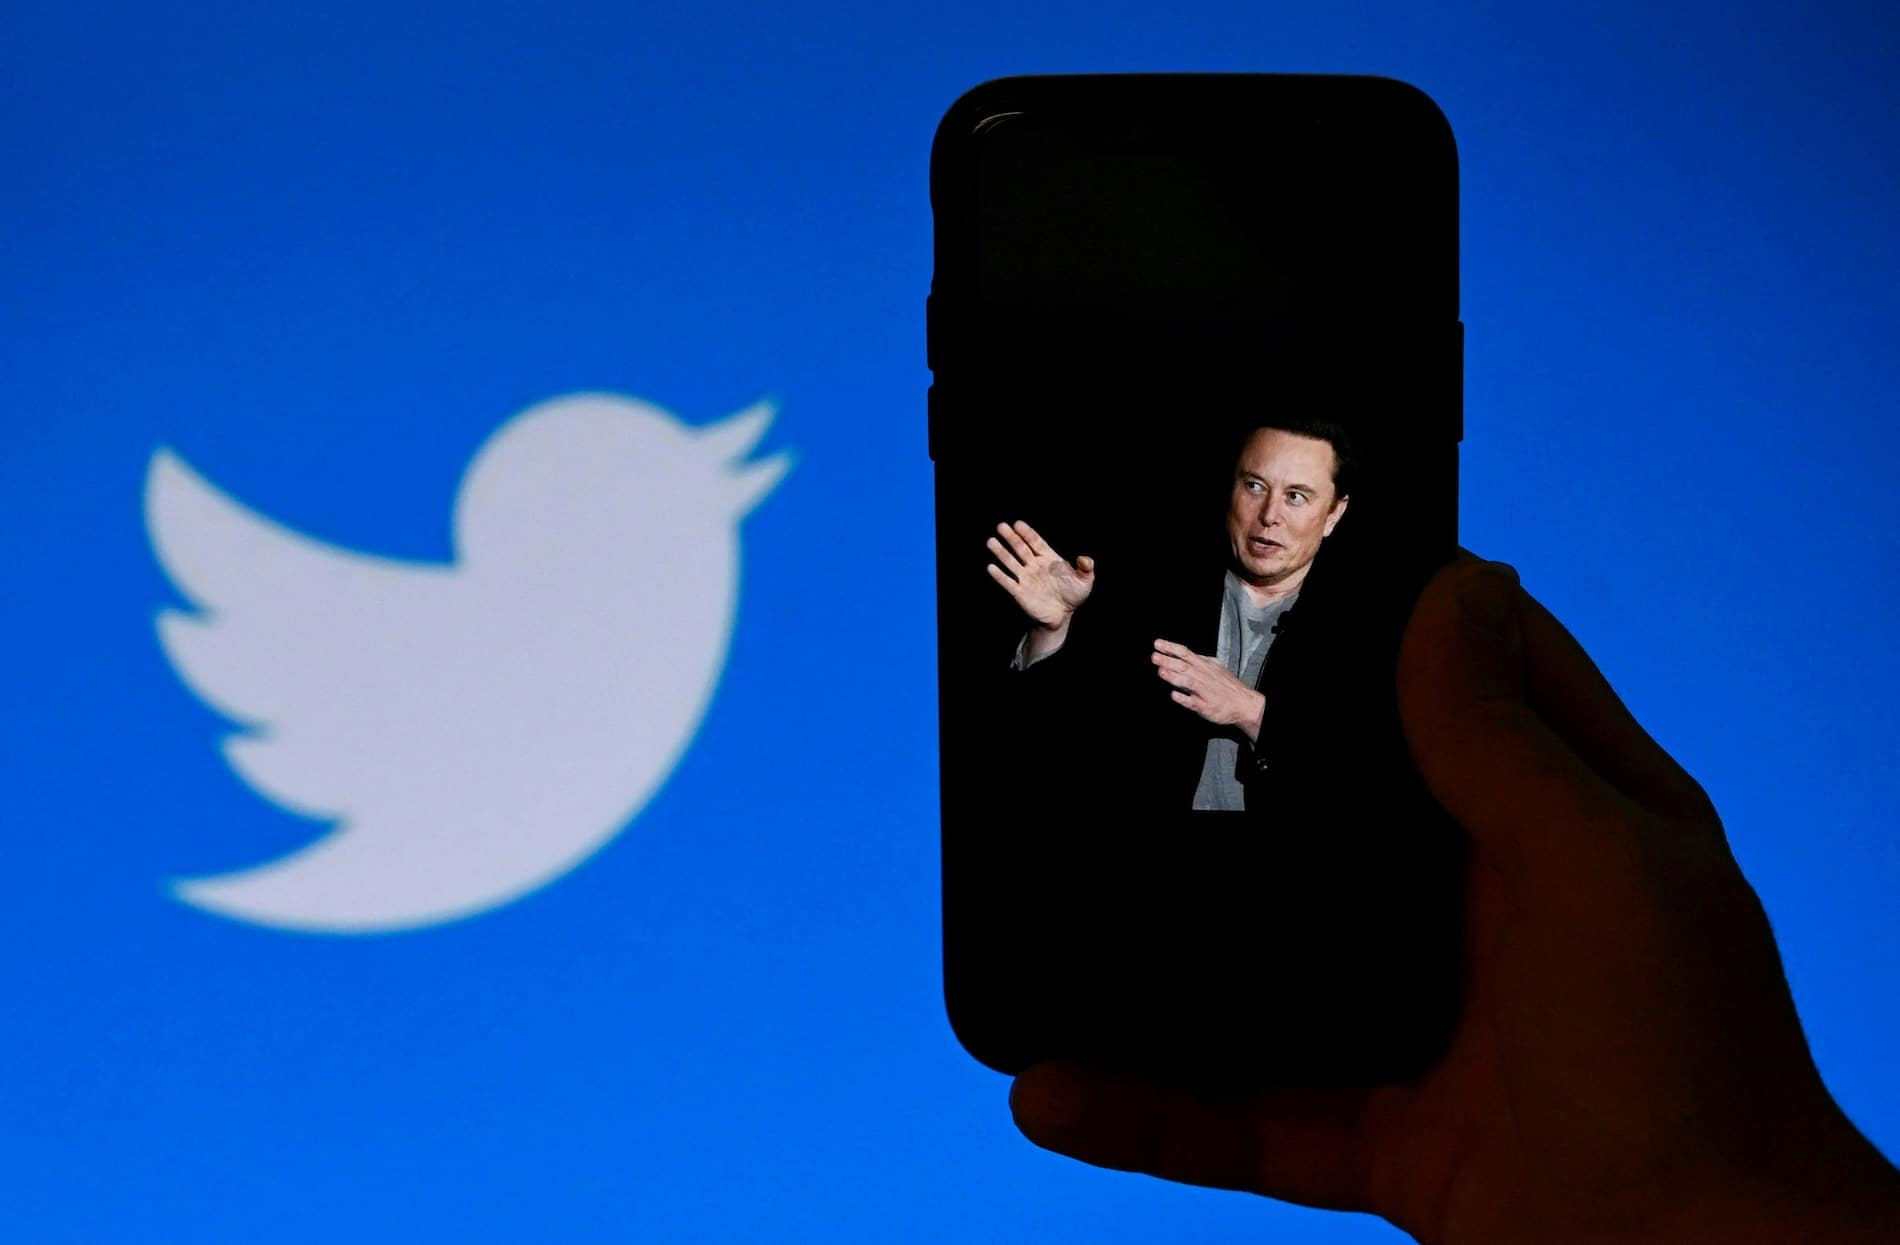 Elon Musk dice comprar Twitter para permitir debates “saludables” en Internet